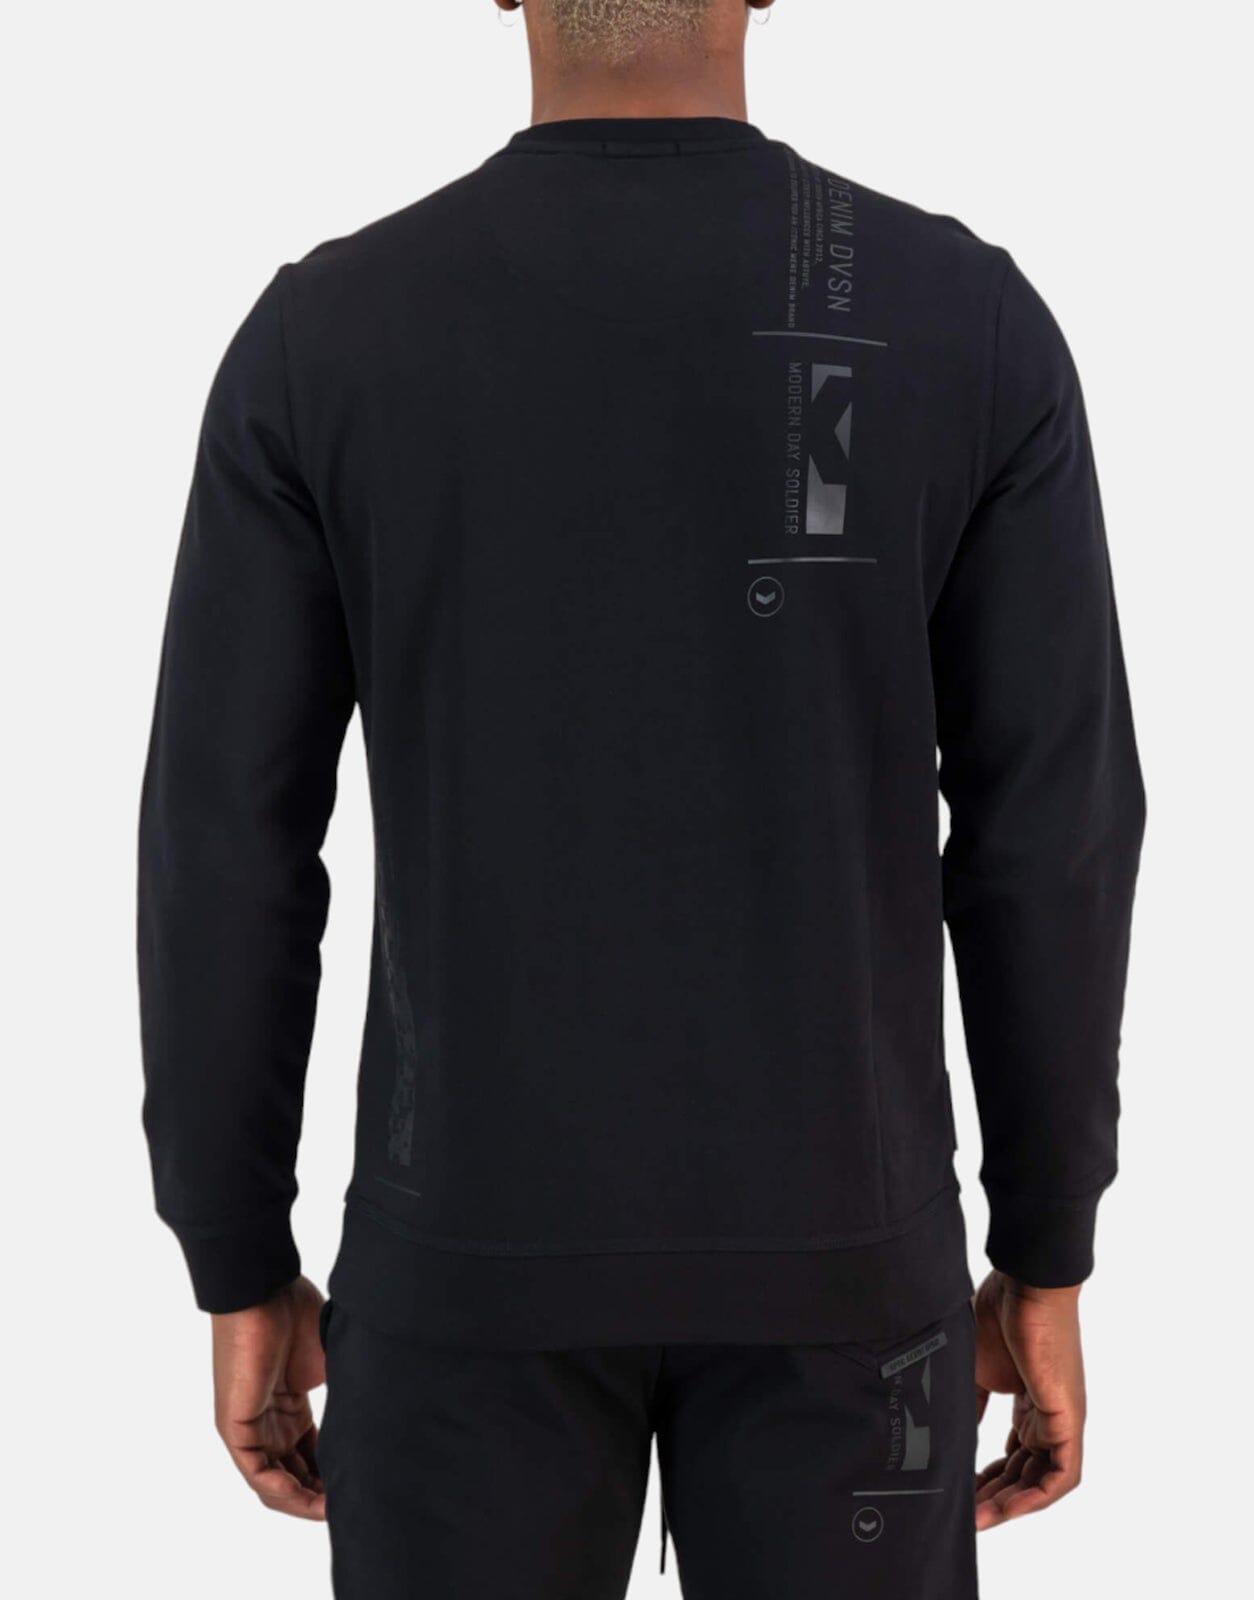 SPCC Varon Black Sweatshirt - Subwear